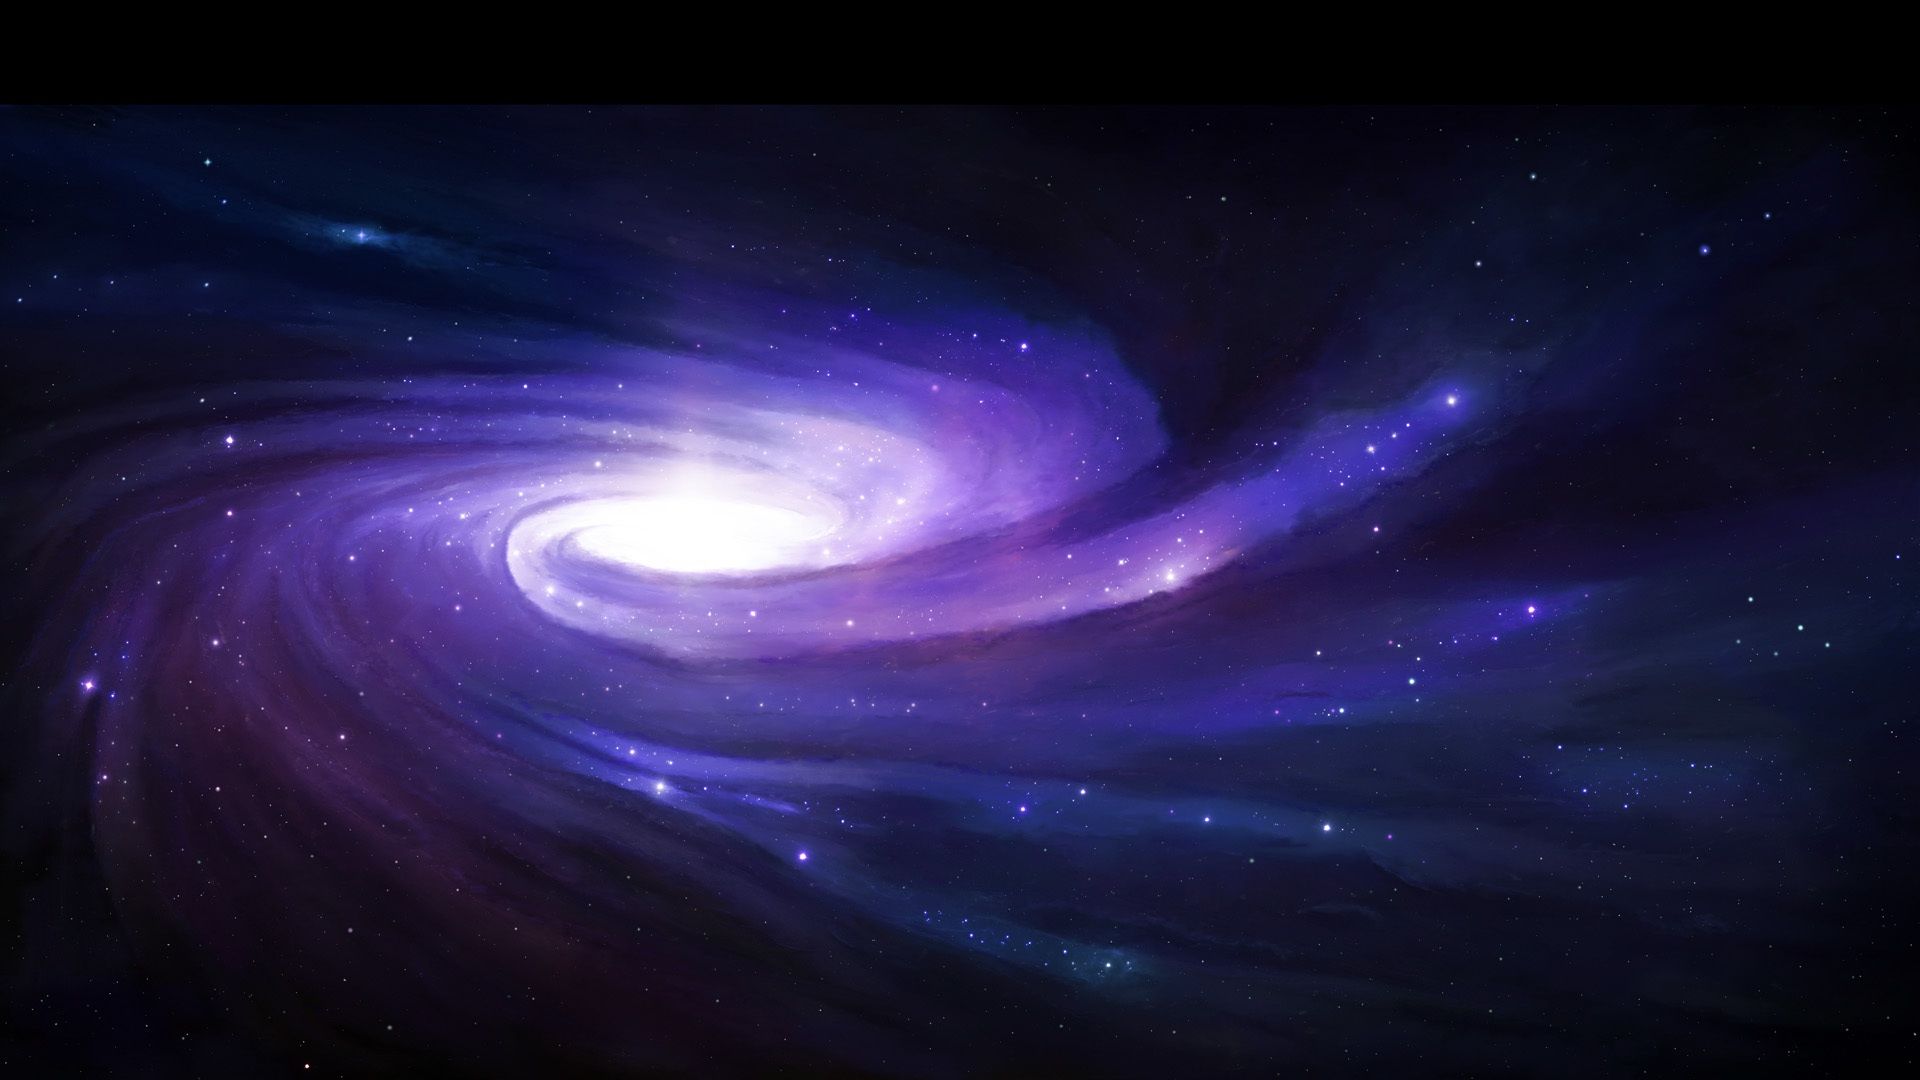 Download 1920x1080 HD Wallpaper galaxy helix nebula dark violet